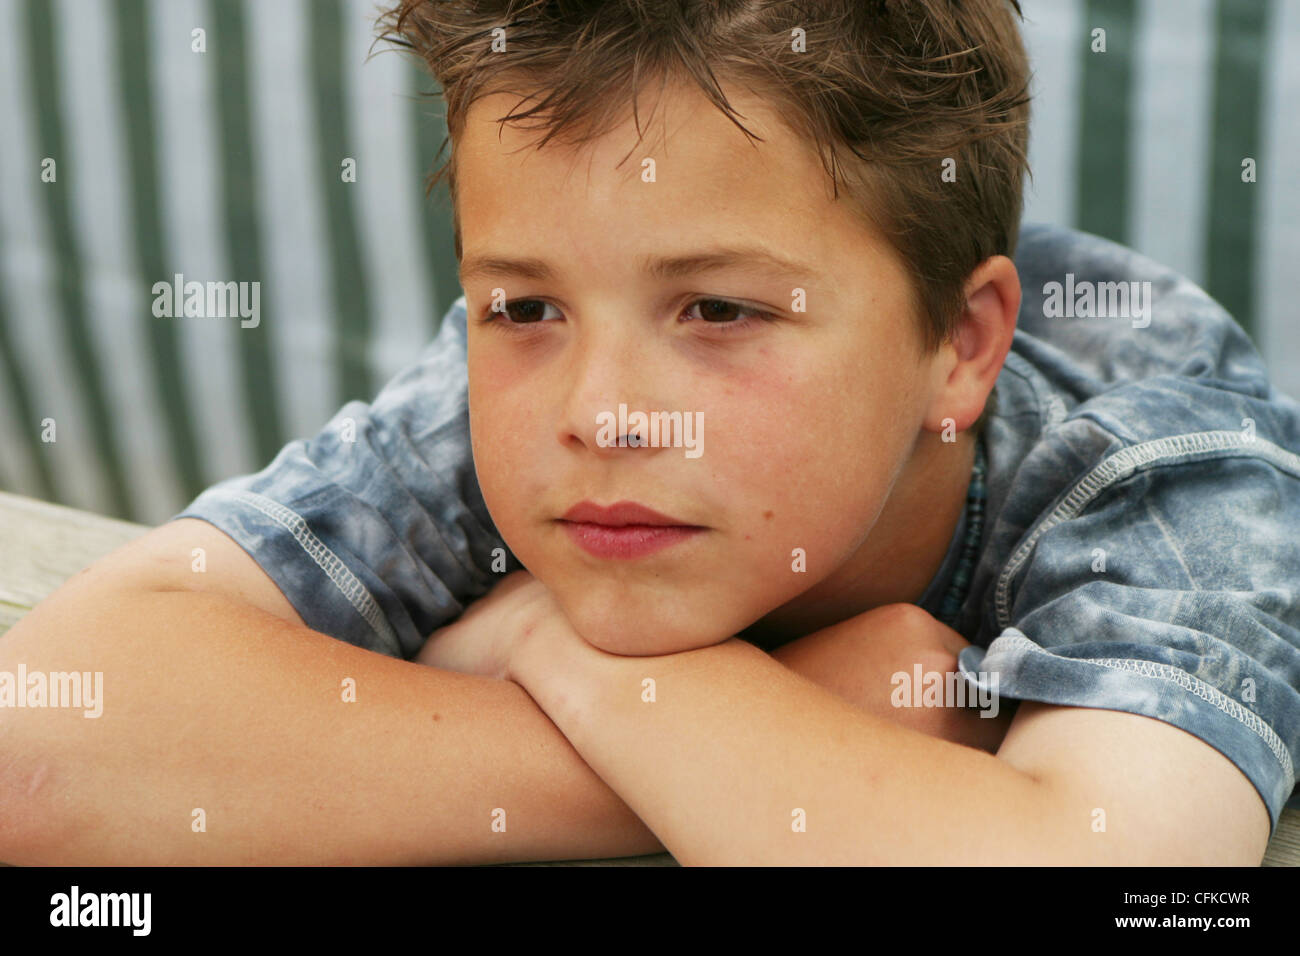 Unhappy child Stock Photo